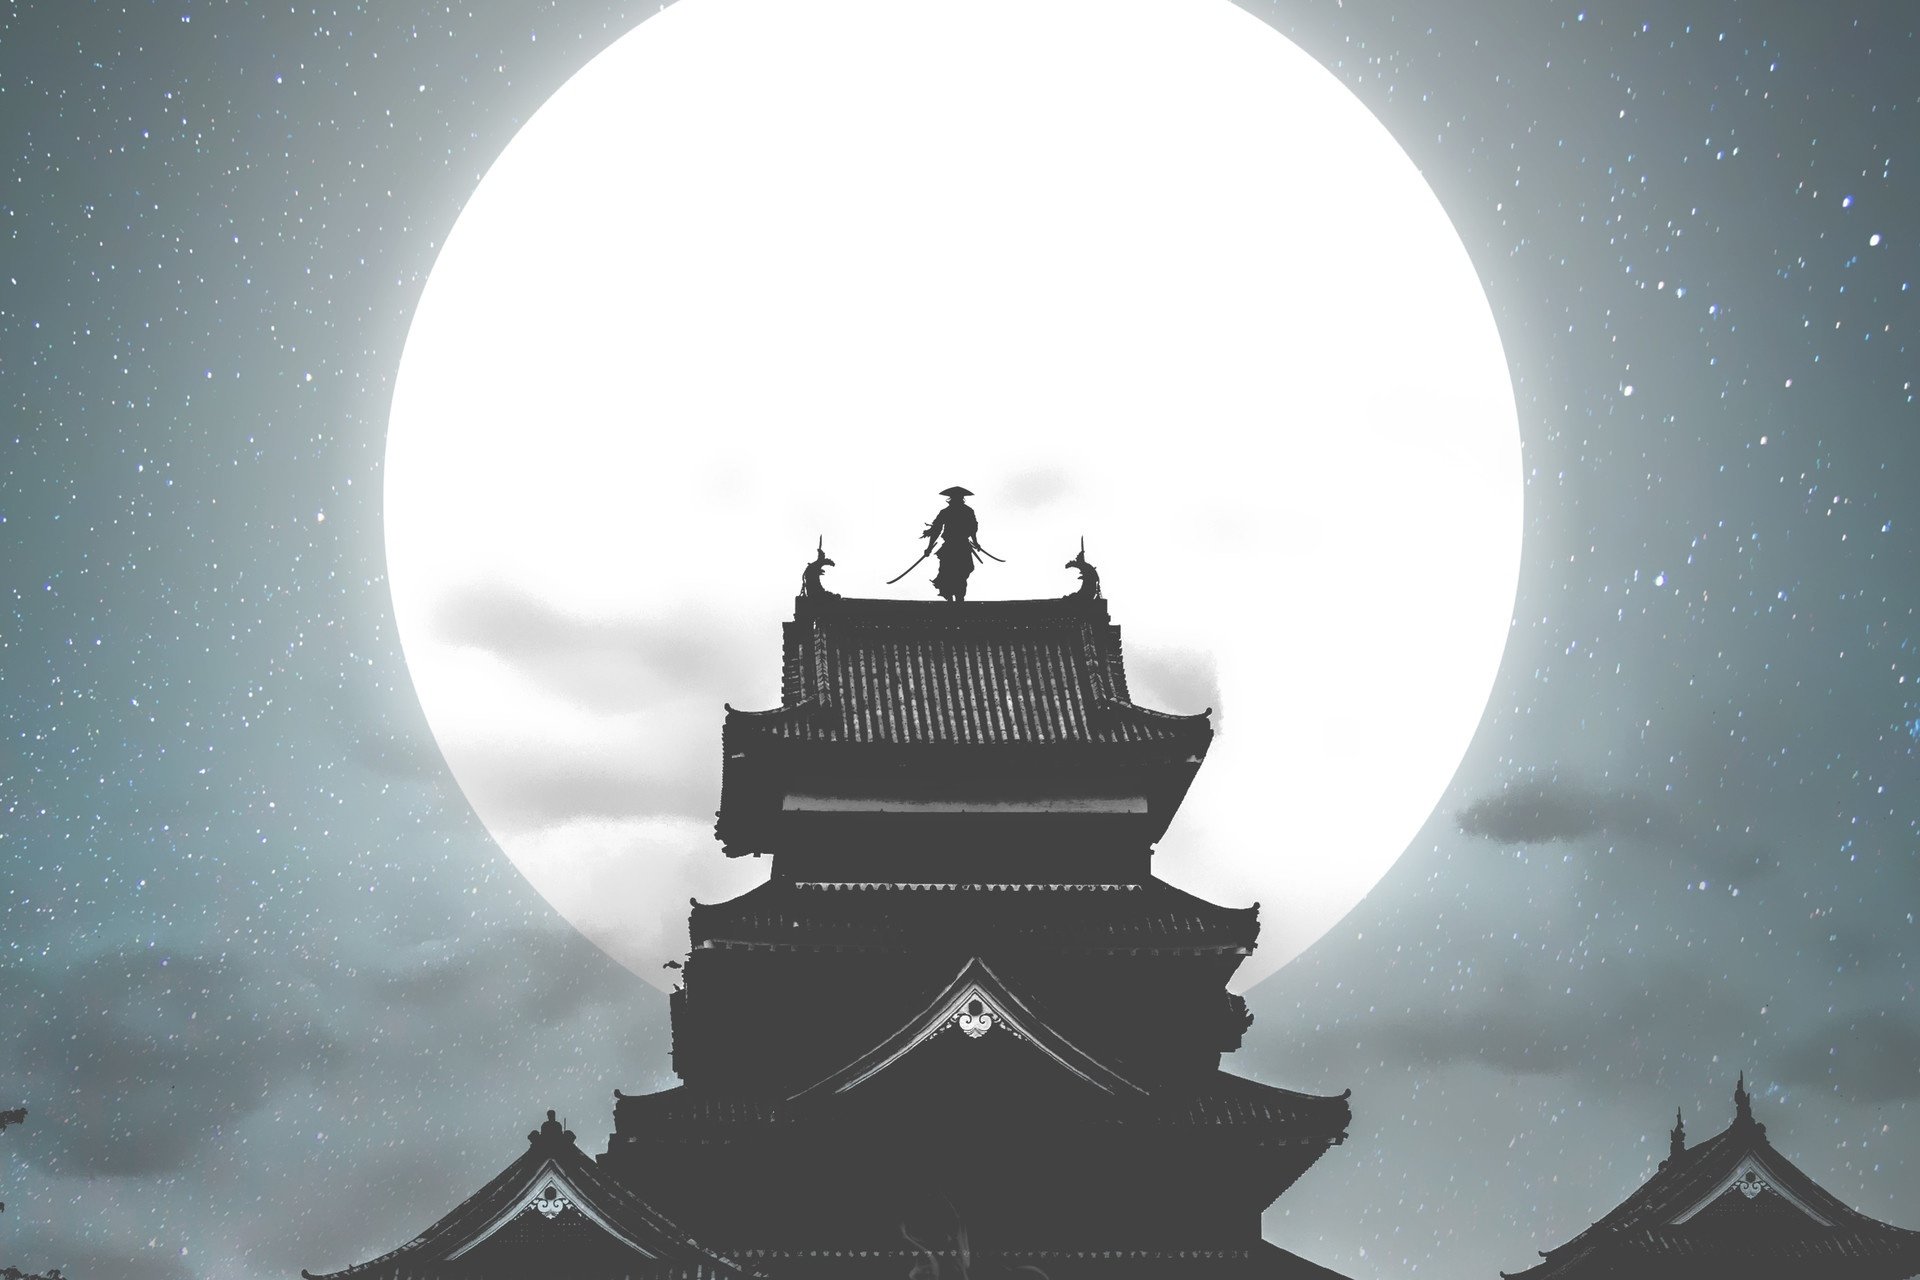 General 1920x1280 samurai Moon night temple warrior men katana sword shilouettes digital art